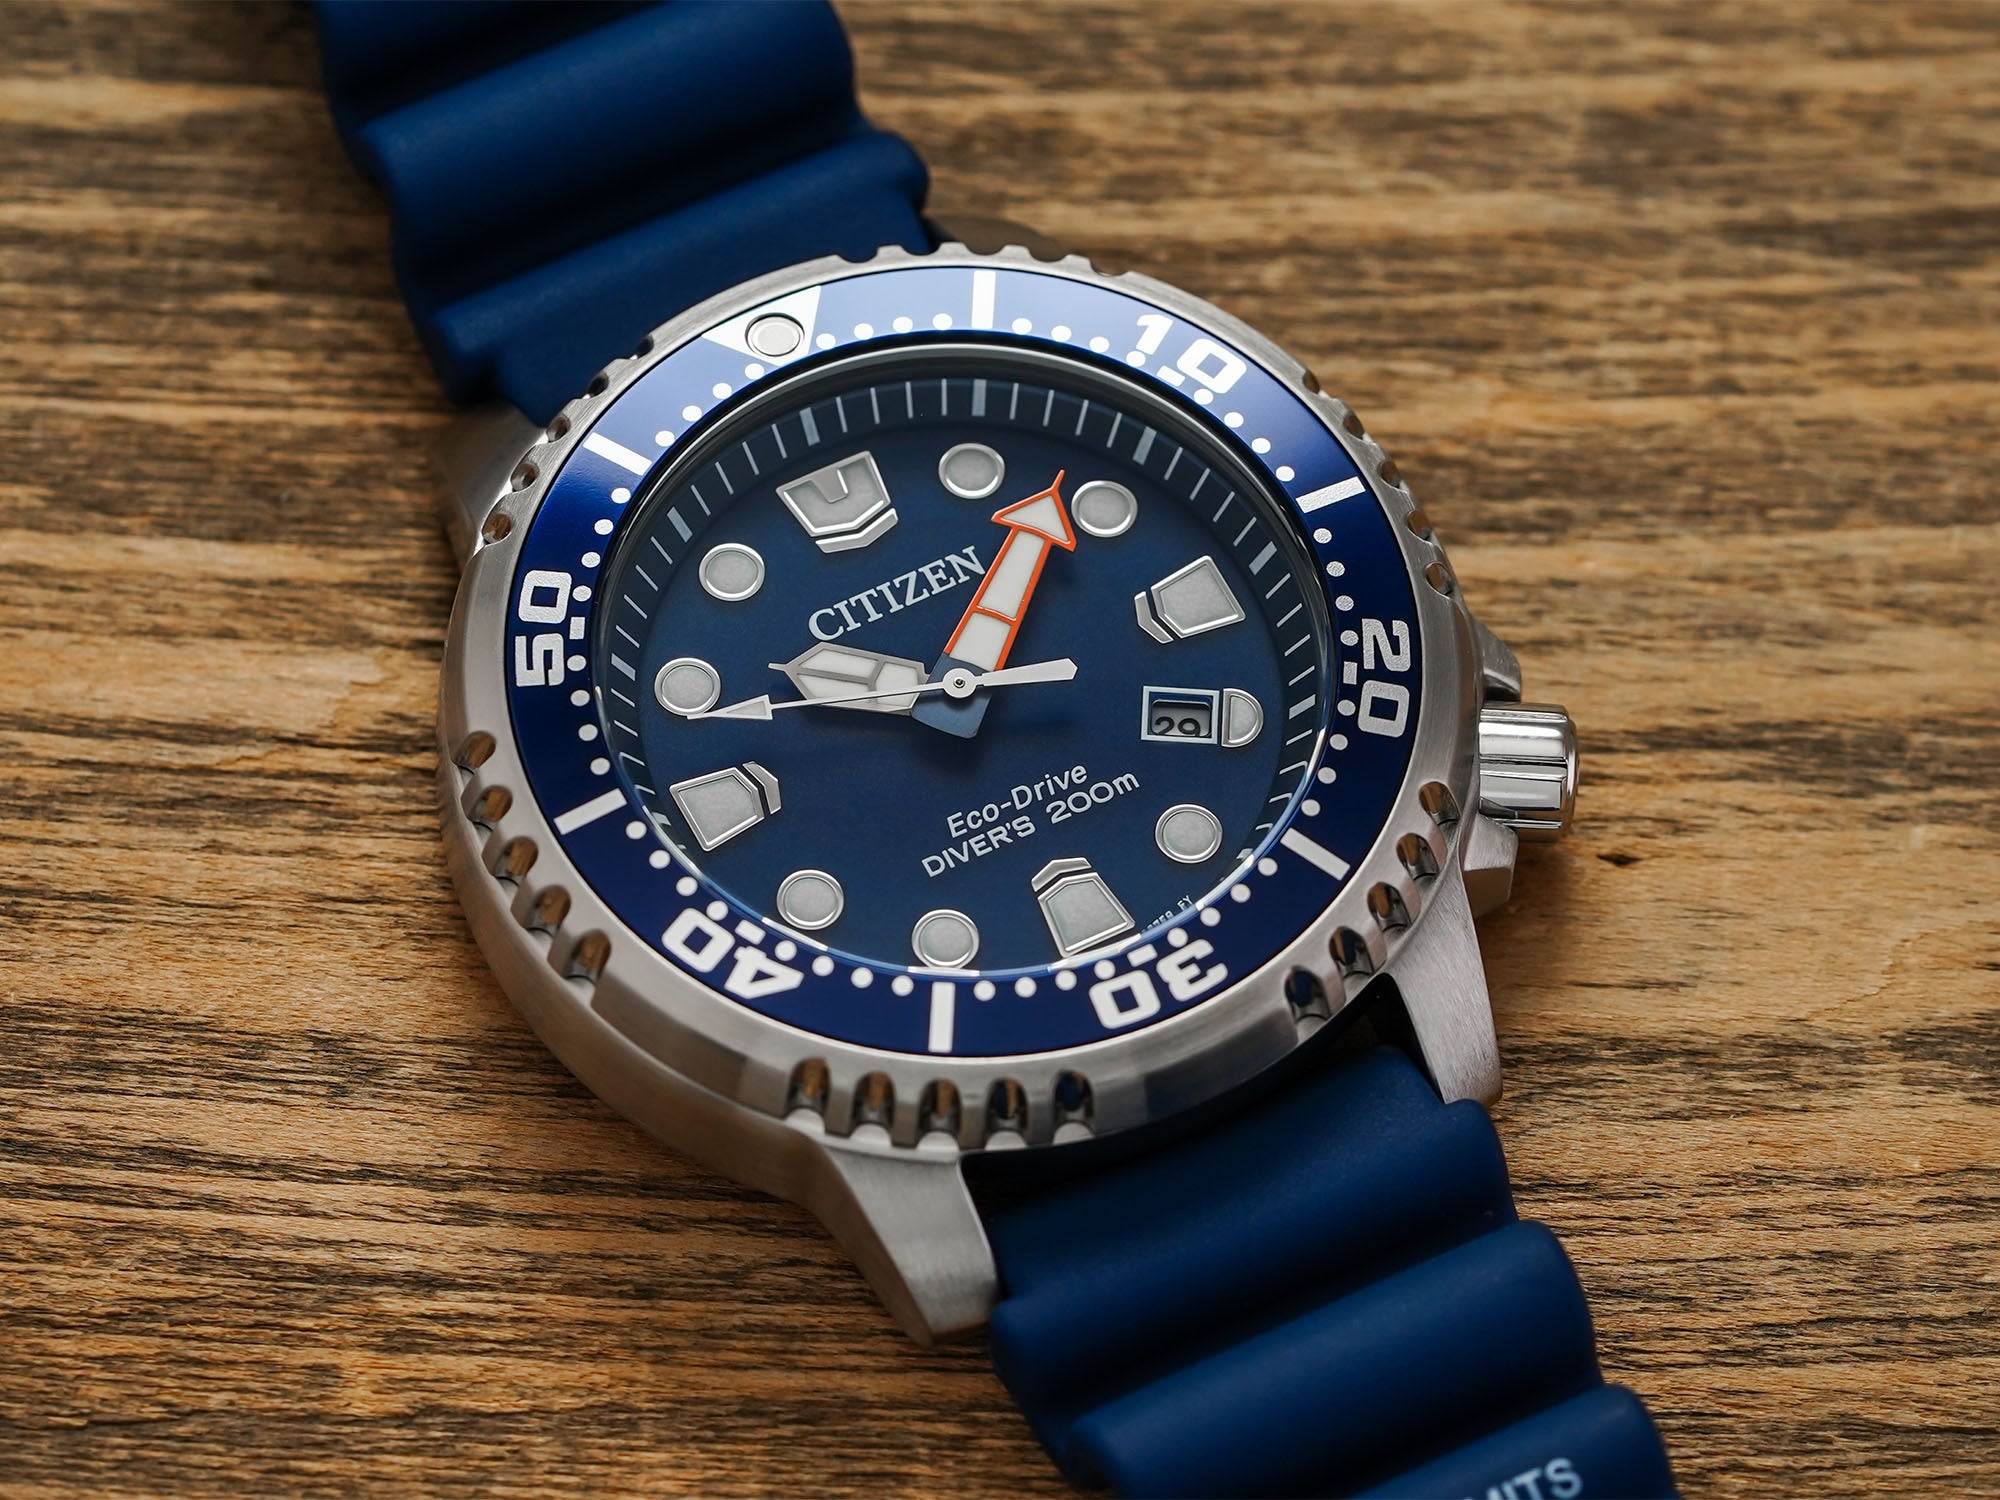 57 Best Dive Watches